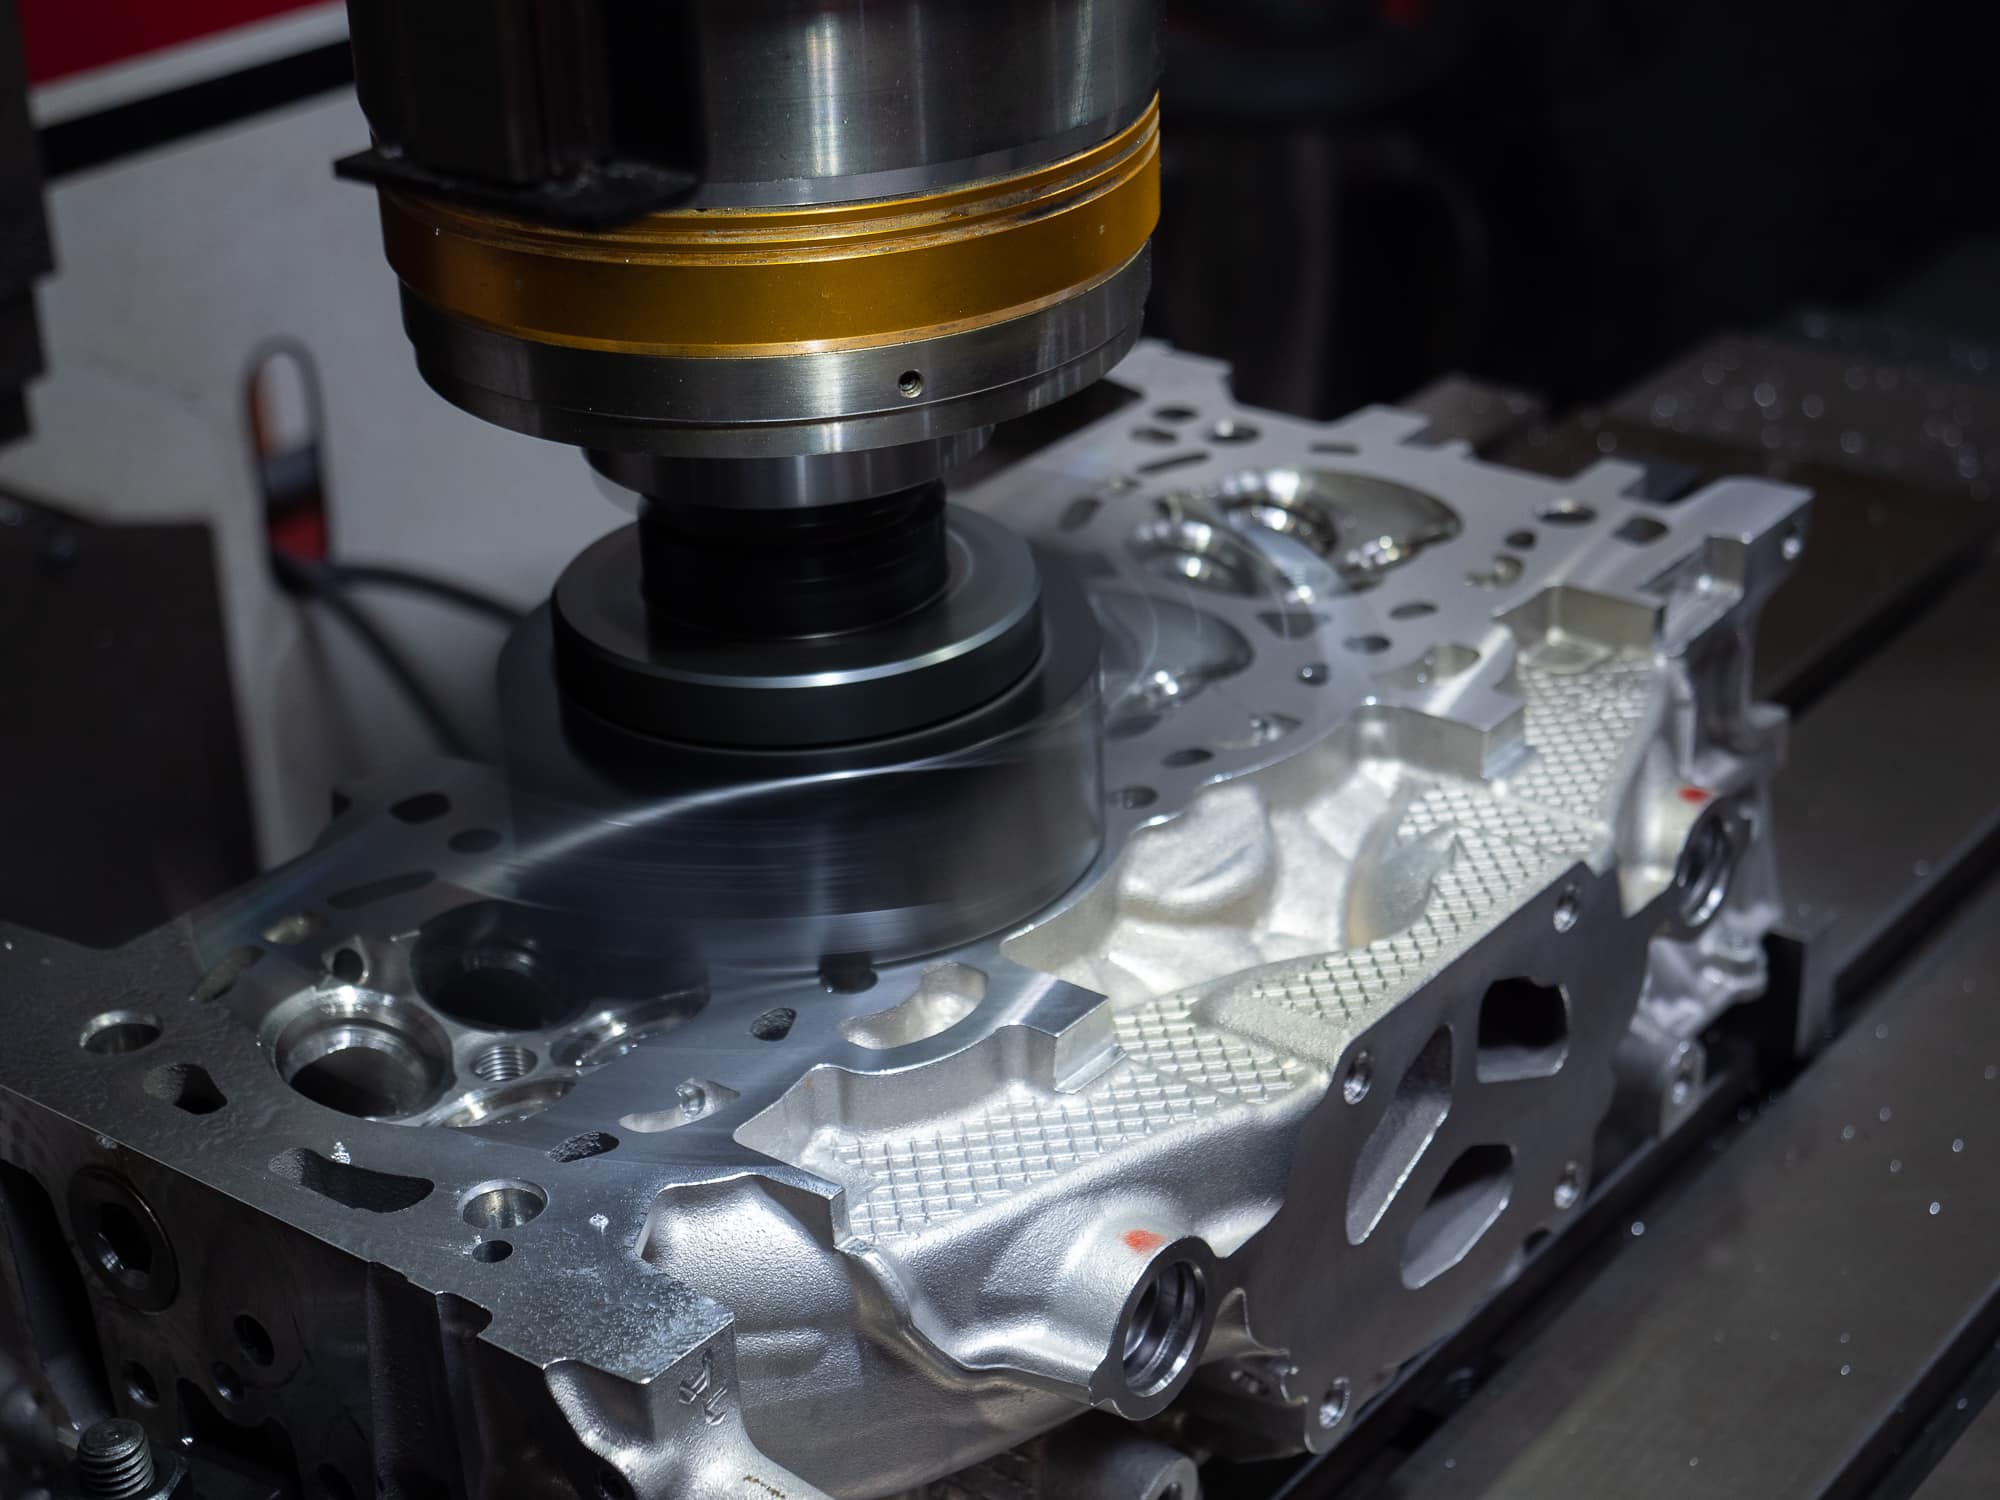 Motul 8100 Power Full Synthetic Oil Change Kit - Ford Focus RS - 2.3L –  Mountune USA